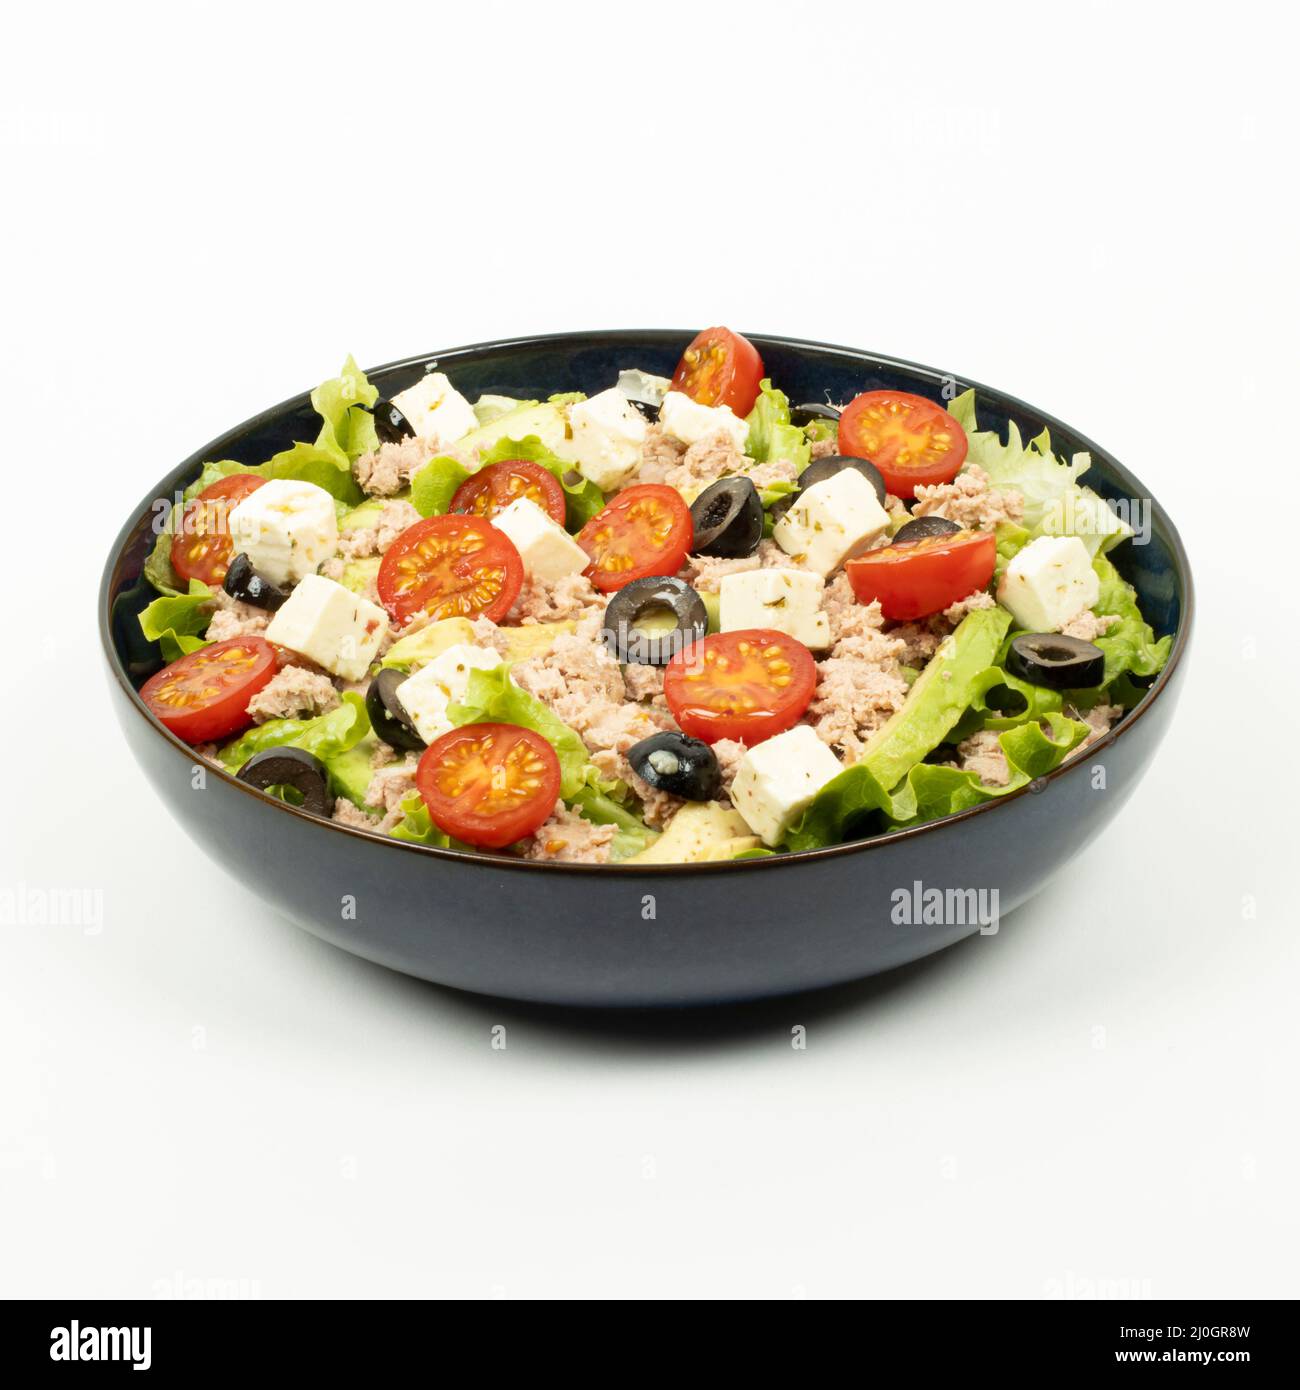 salad, avocado, tuna, tomatoes, feta in a bowl on a white background - studio shot Stock Photo